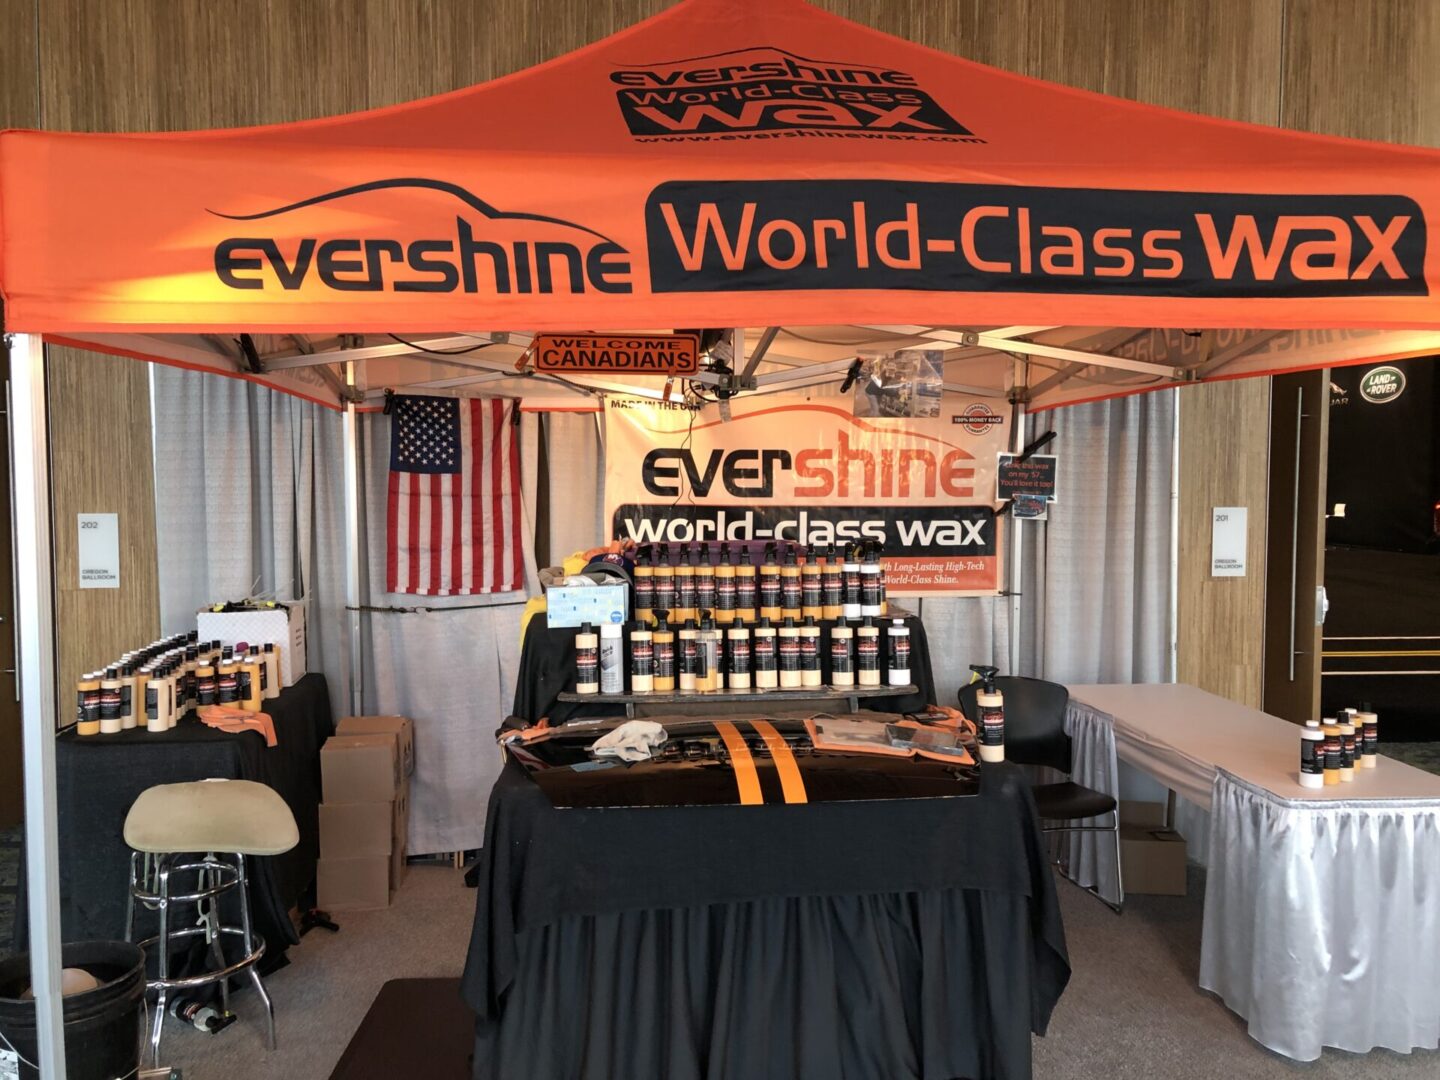 Evershine World Class wax Setup